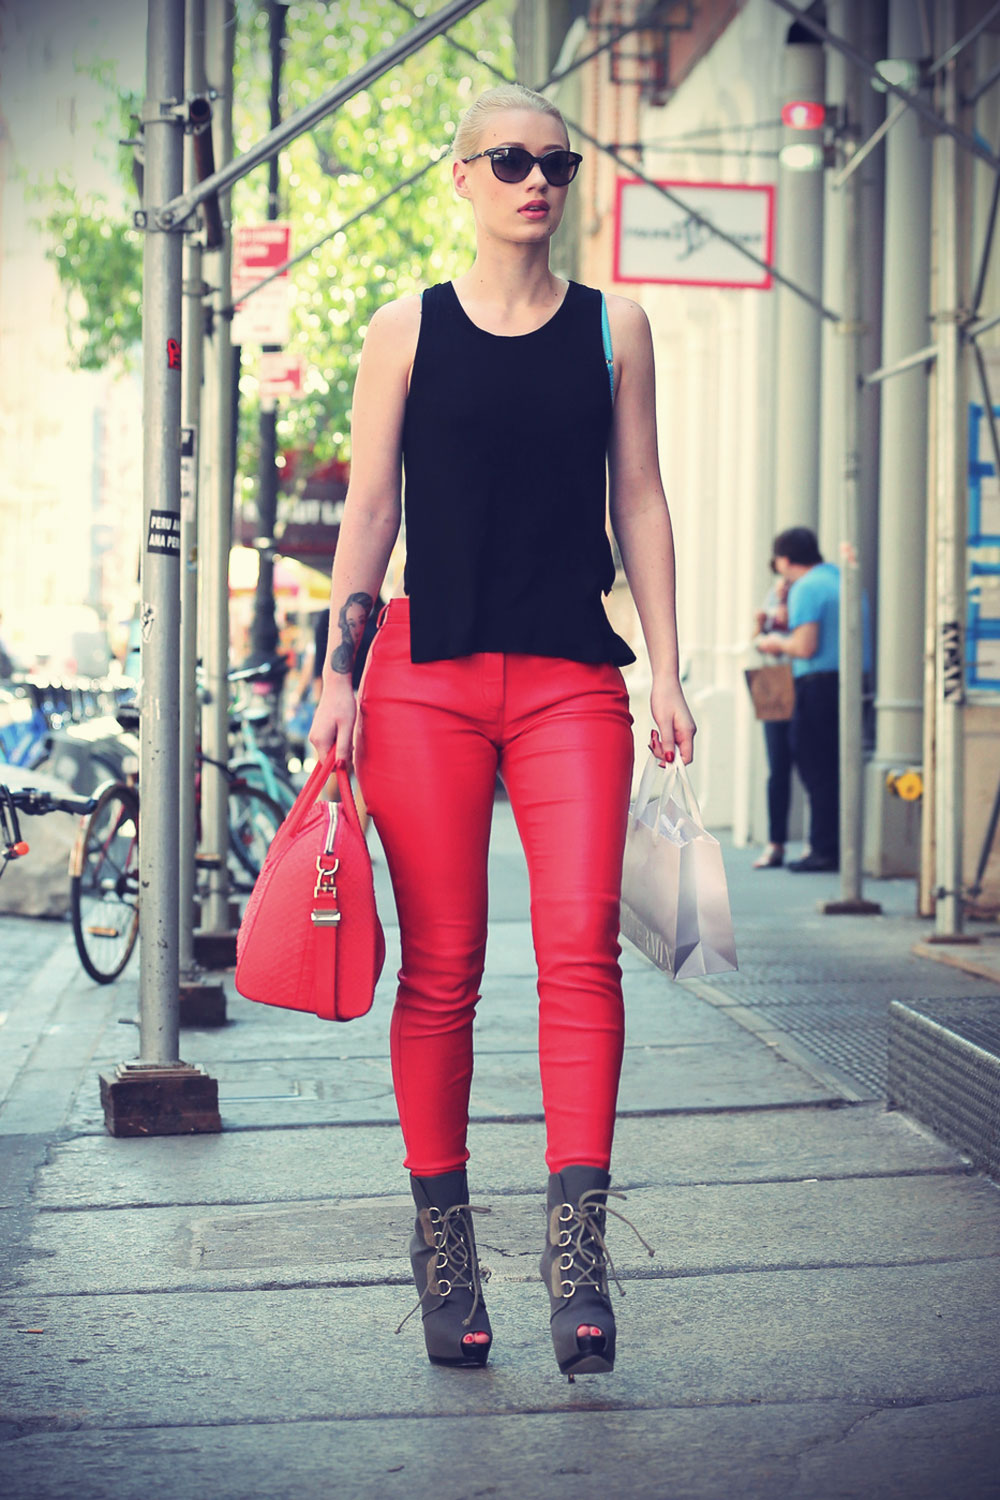 Iggy Azalea wearing red leather pants spotted shopping around at SoHo